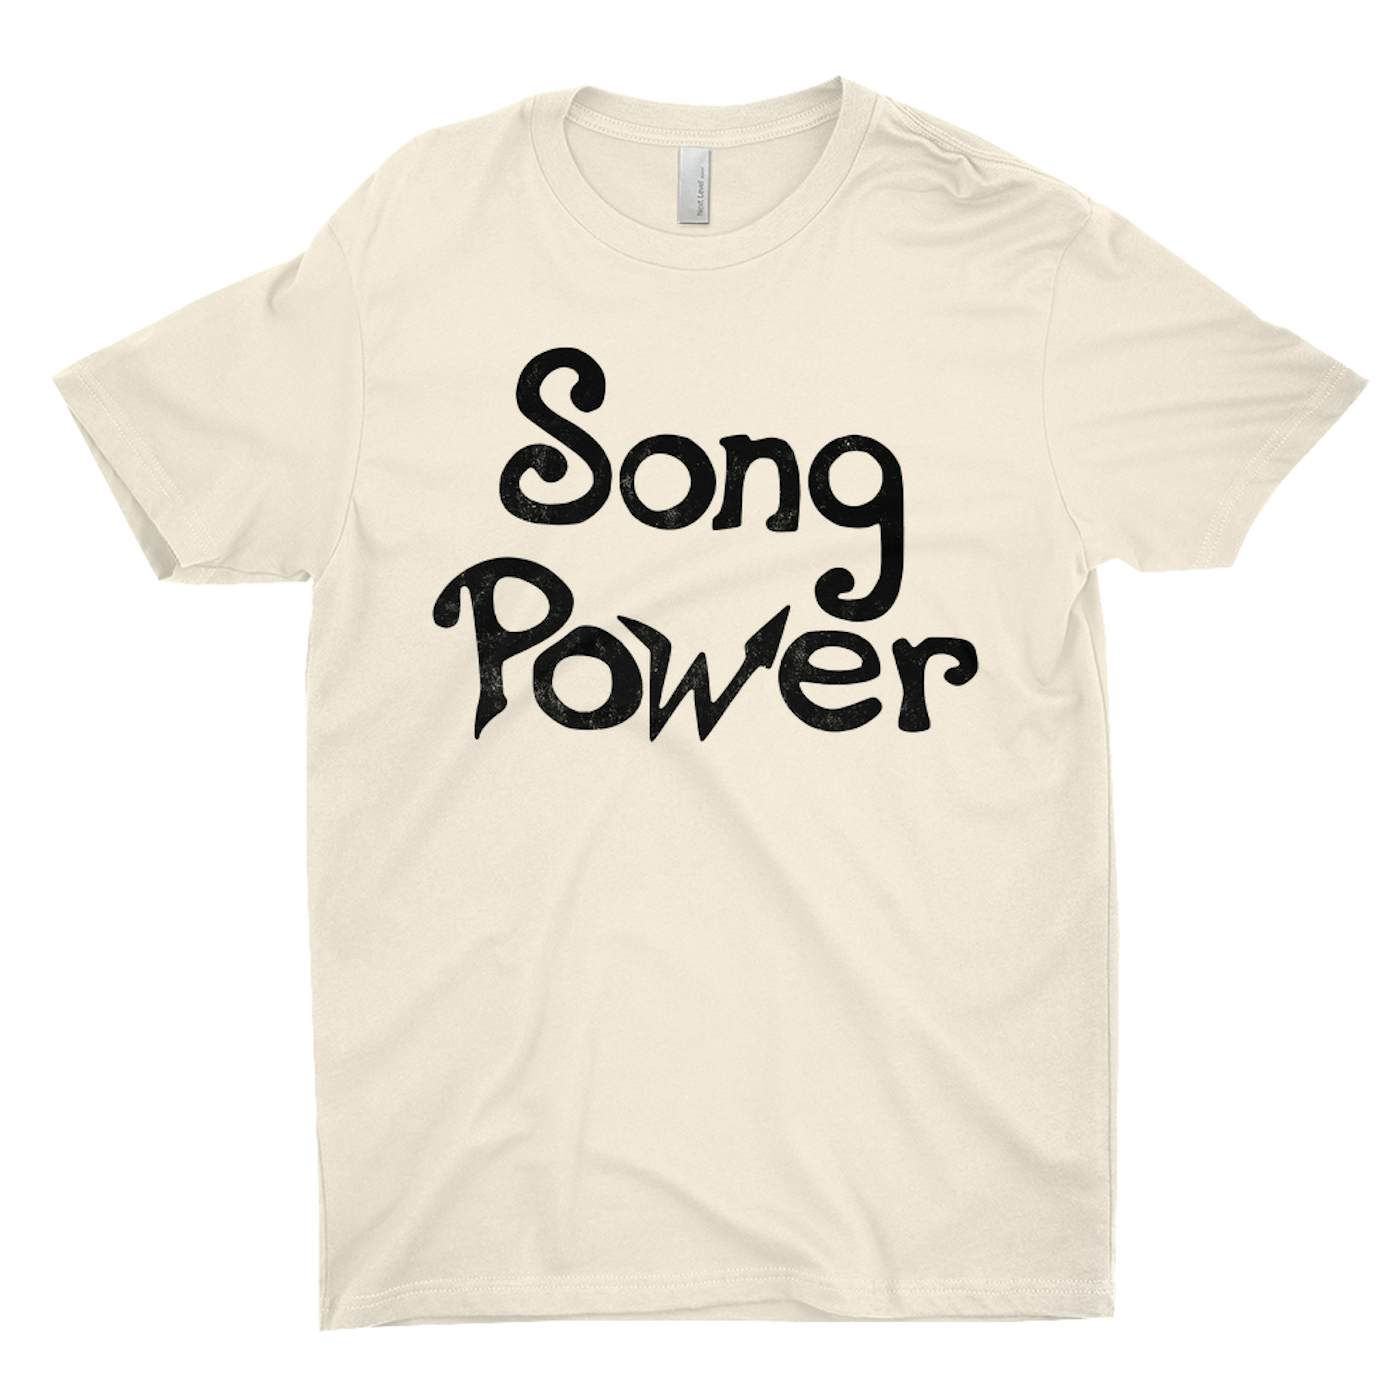 The Eagles T-Shirt | Song Power Worn By Glenn Frey The Eagles Shirt